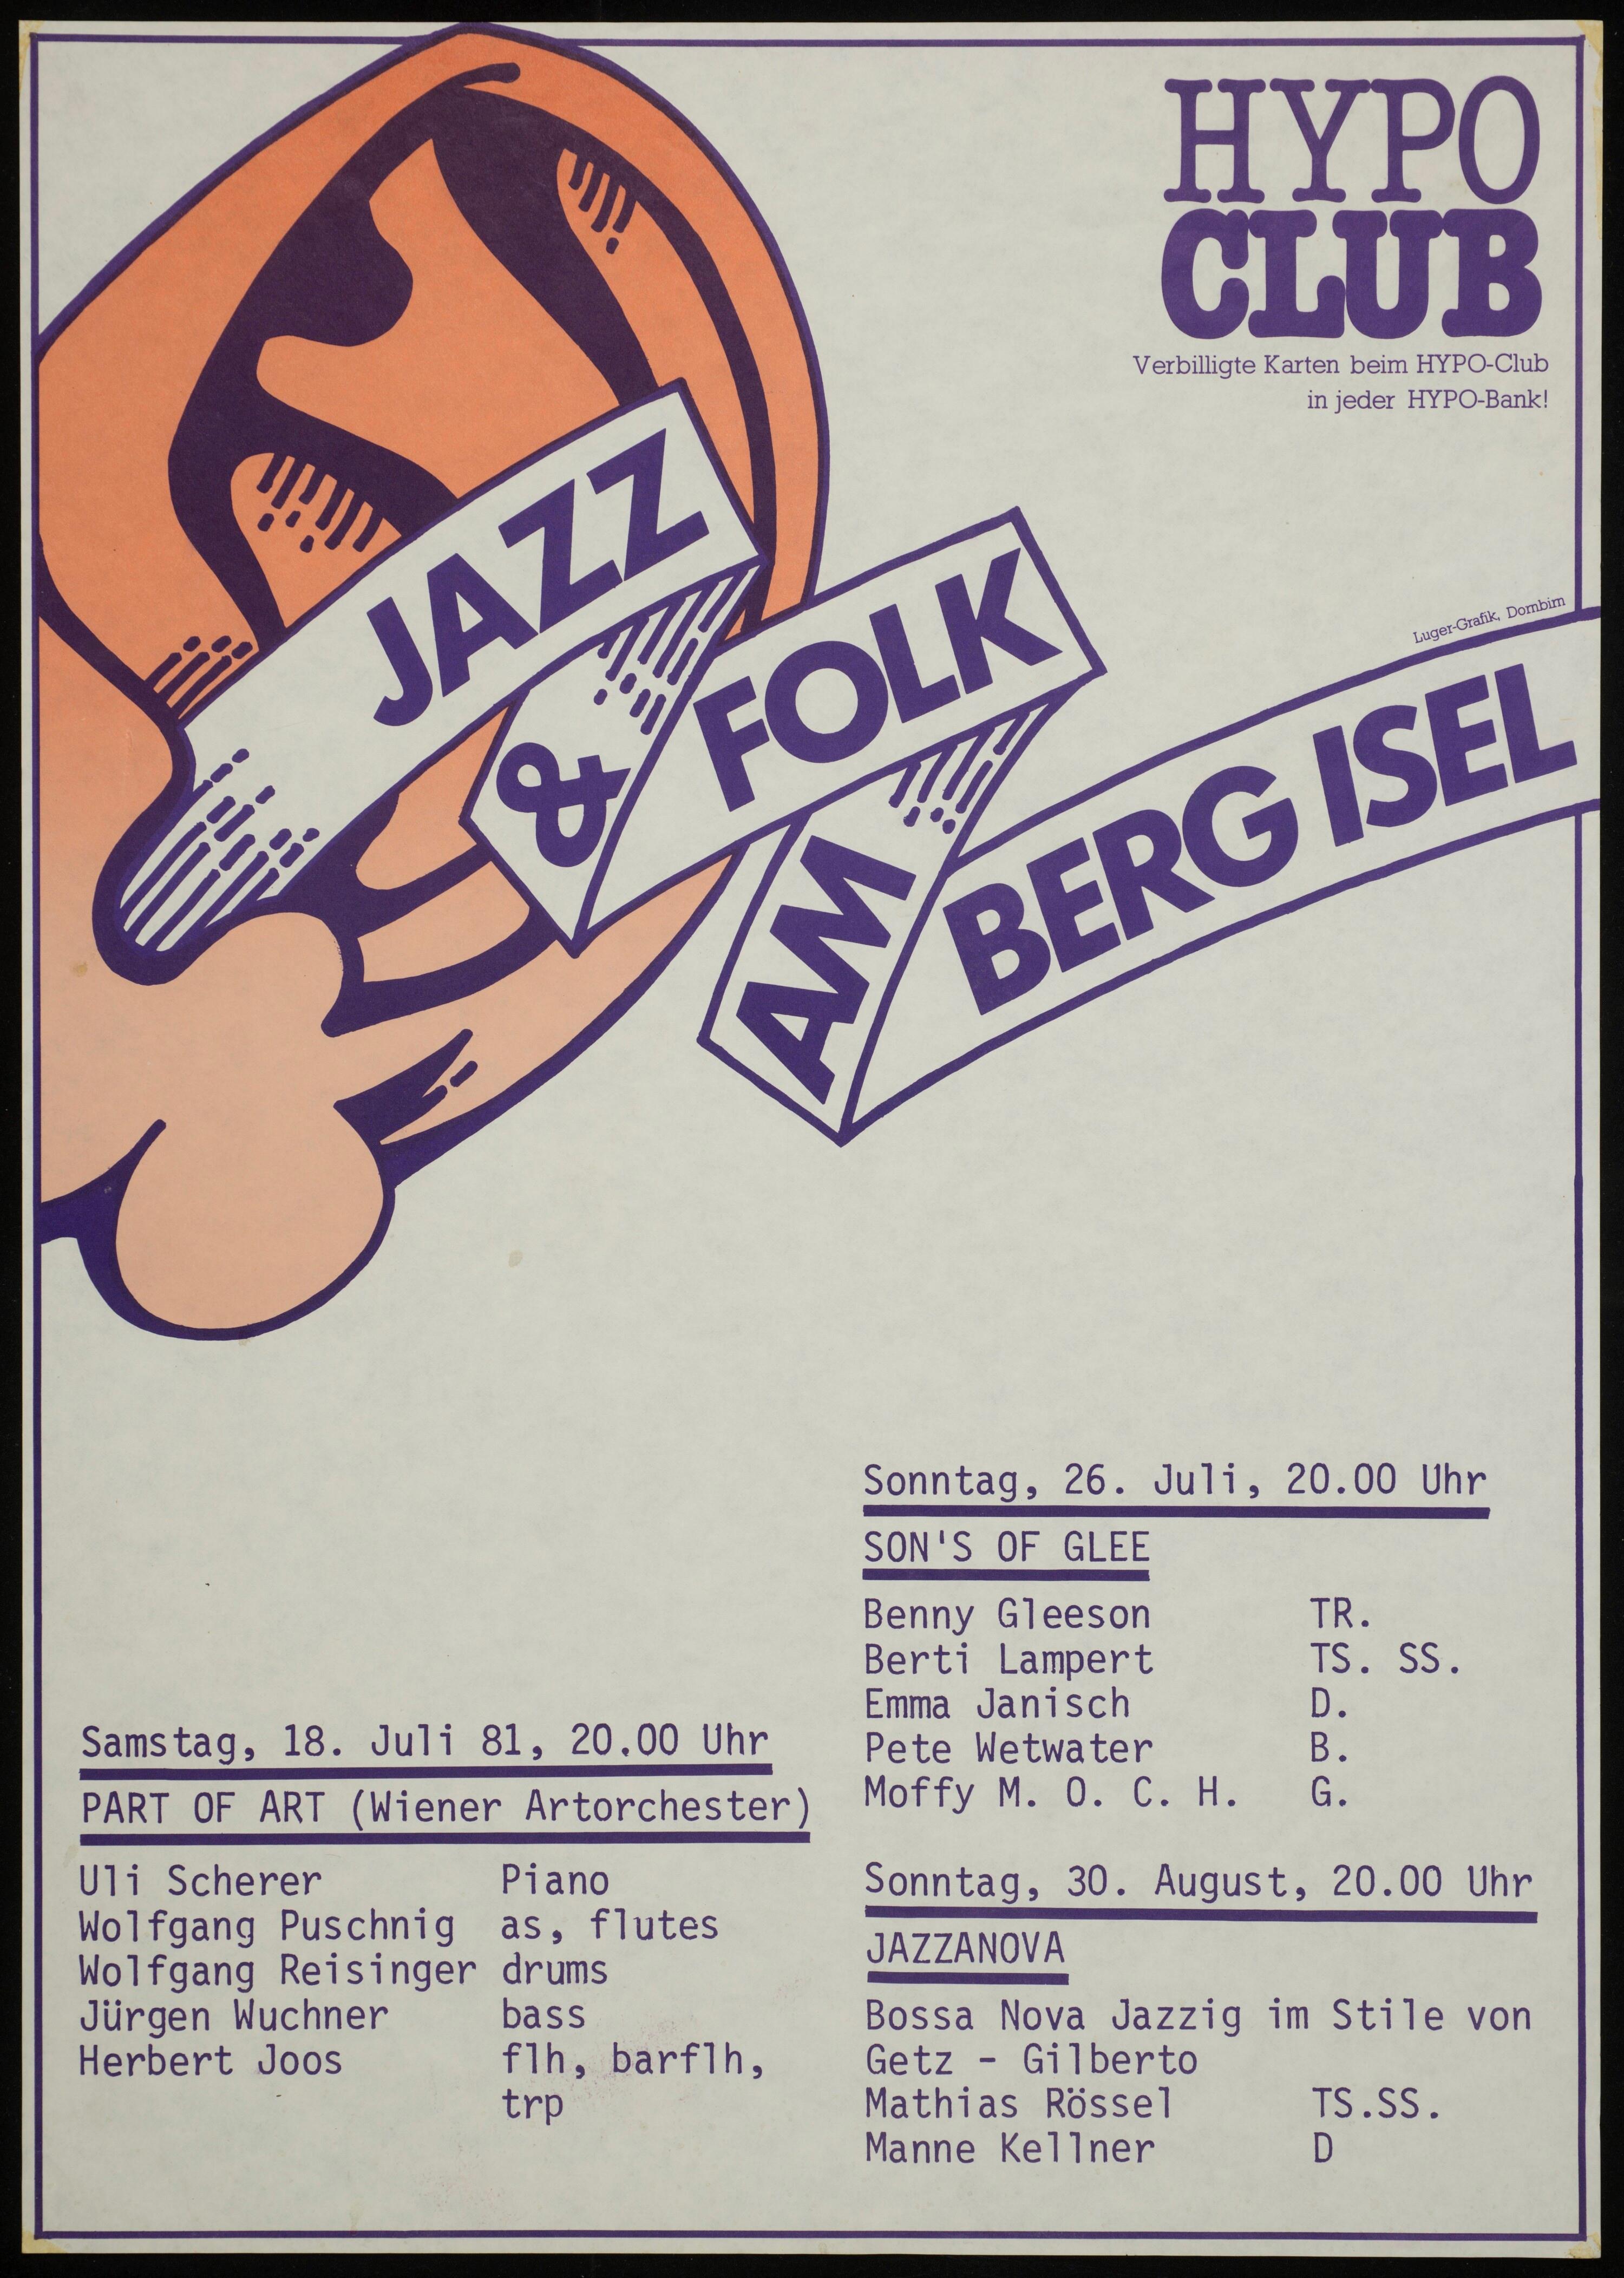 Jazz & Folk am Berg Isel></div>


    <hr>
    <div class=